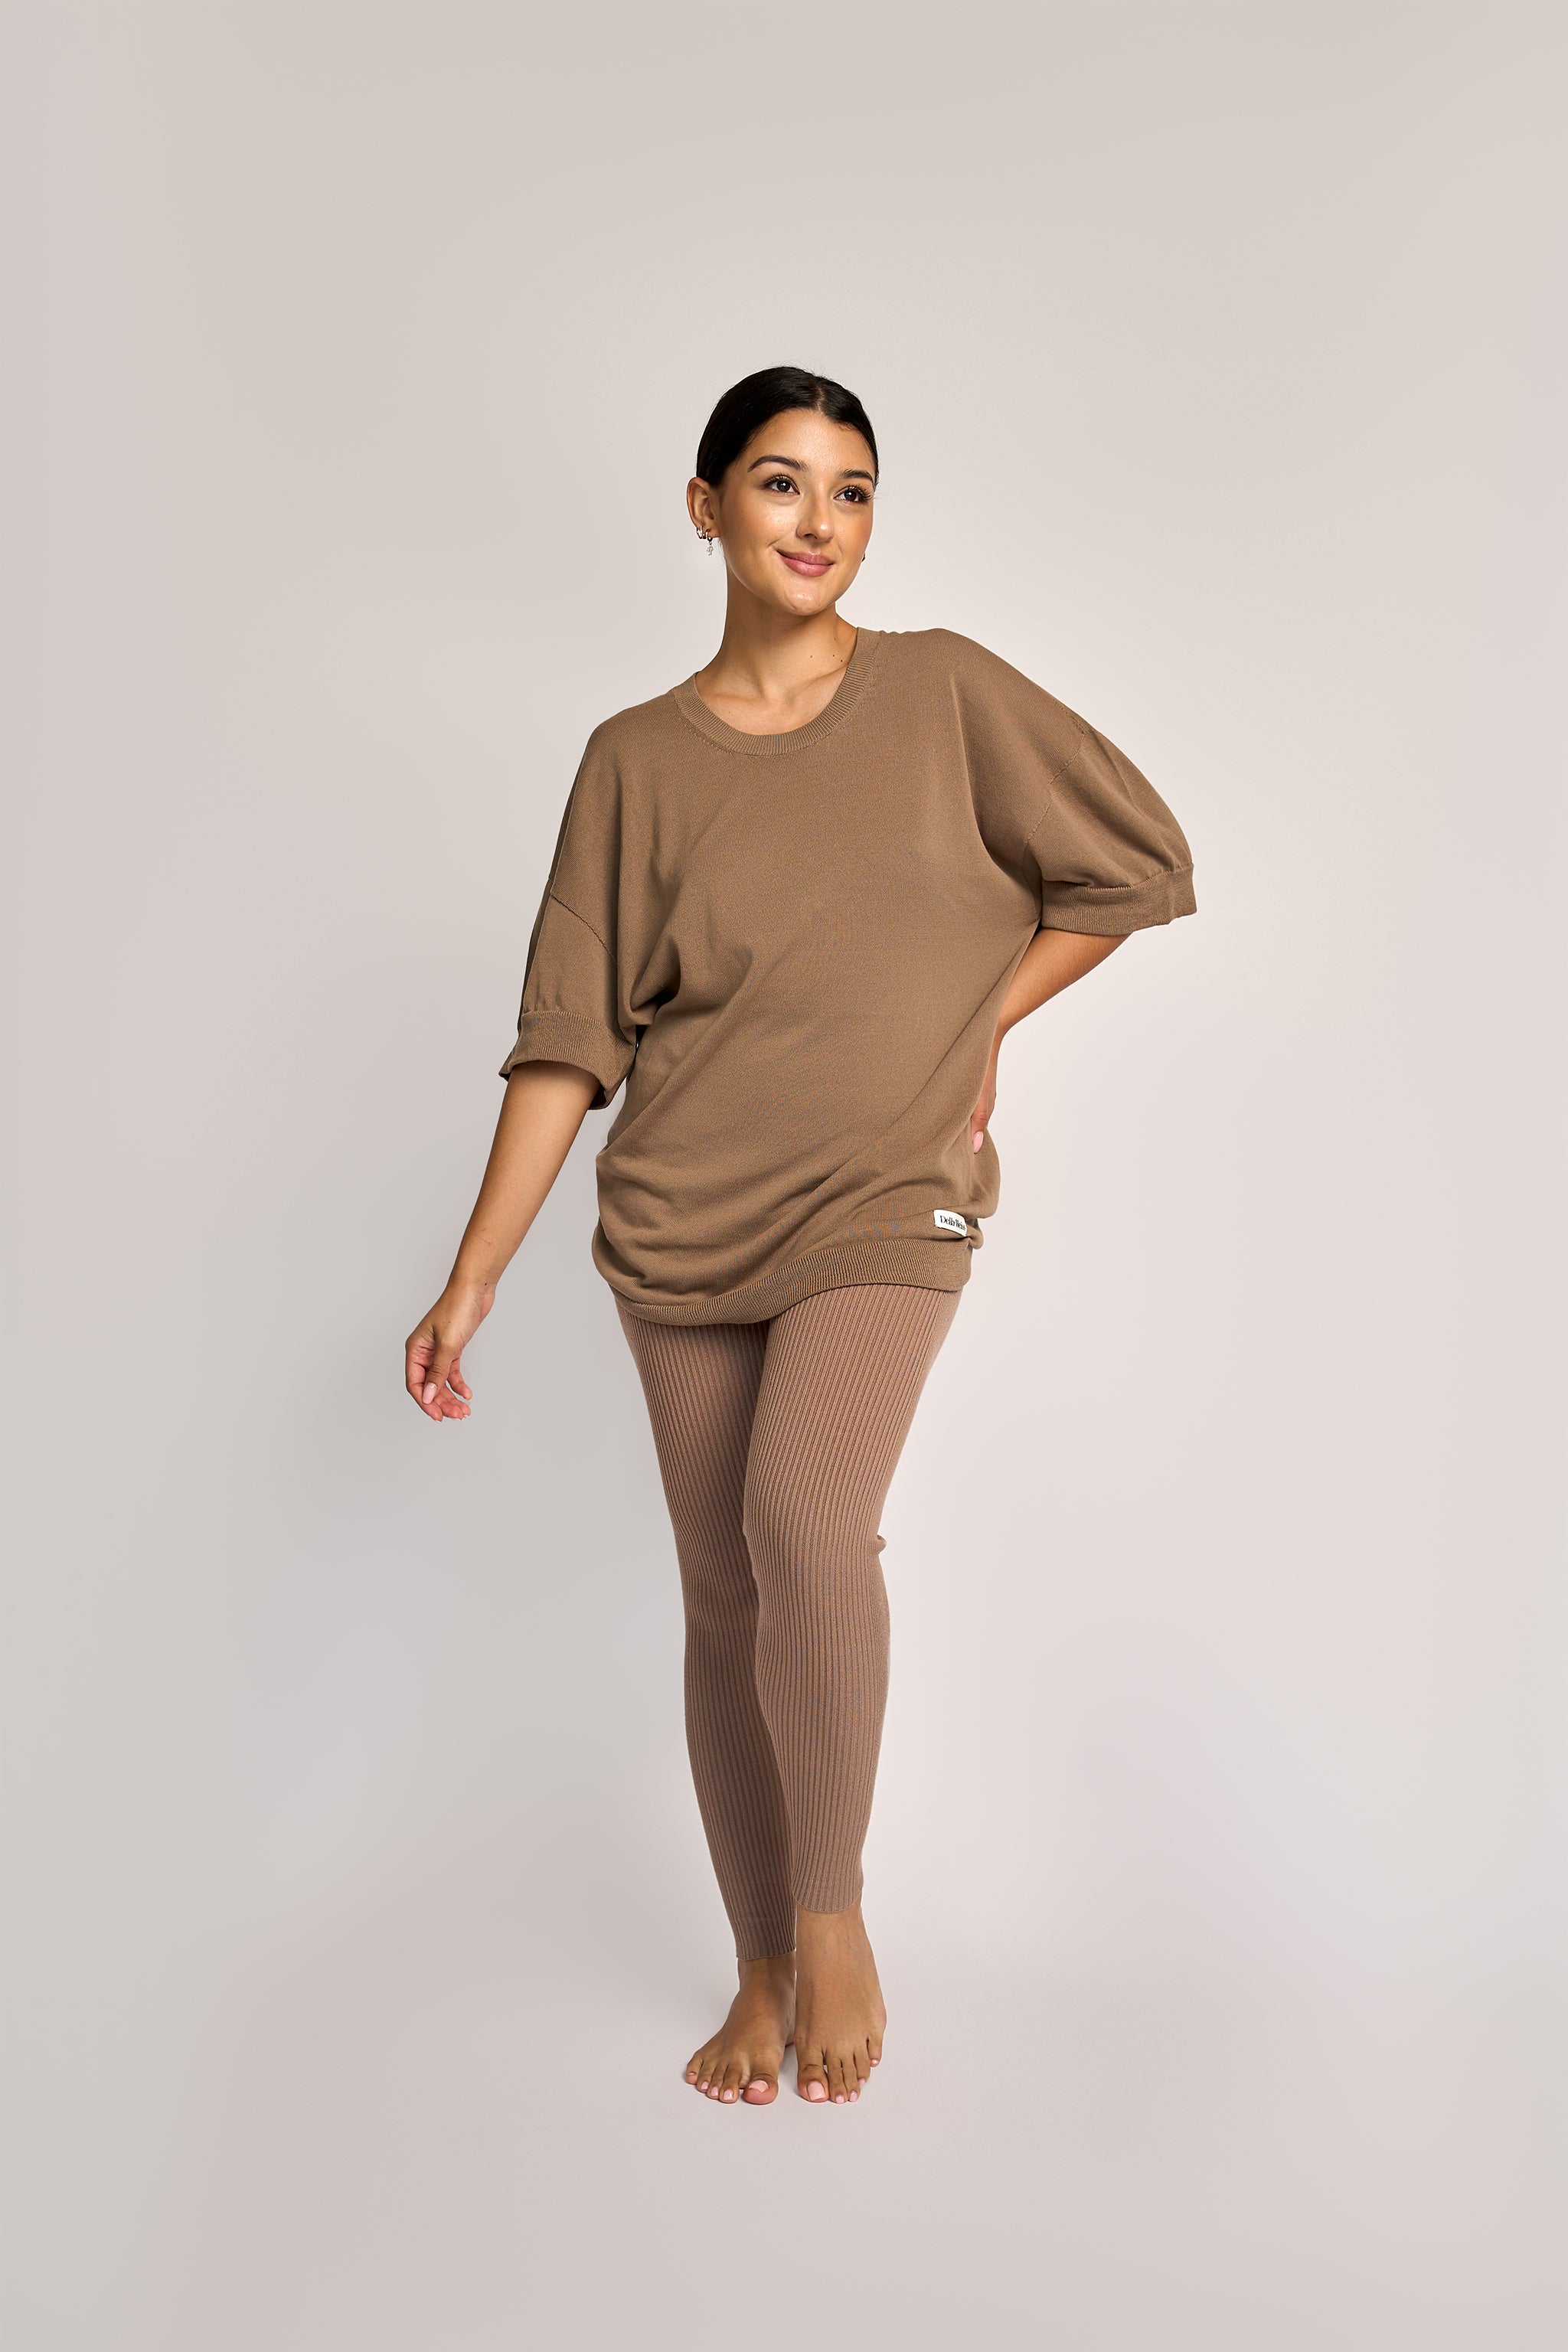 SENSI' Leggings Women's 3/4 Seamless Microfiber Made in Italy Brown at   Women's Clothing store